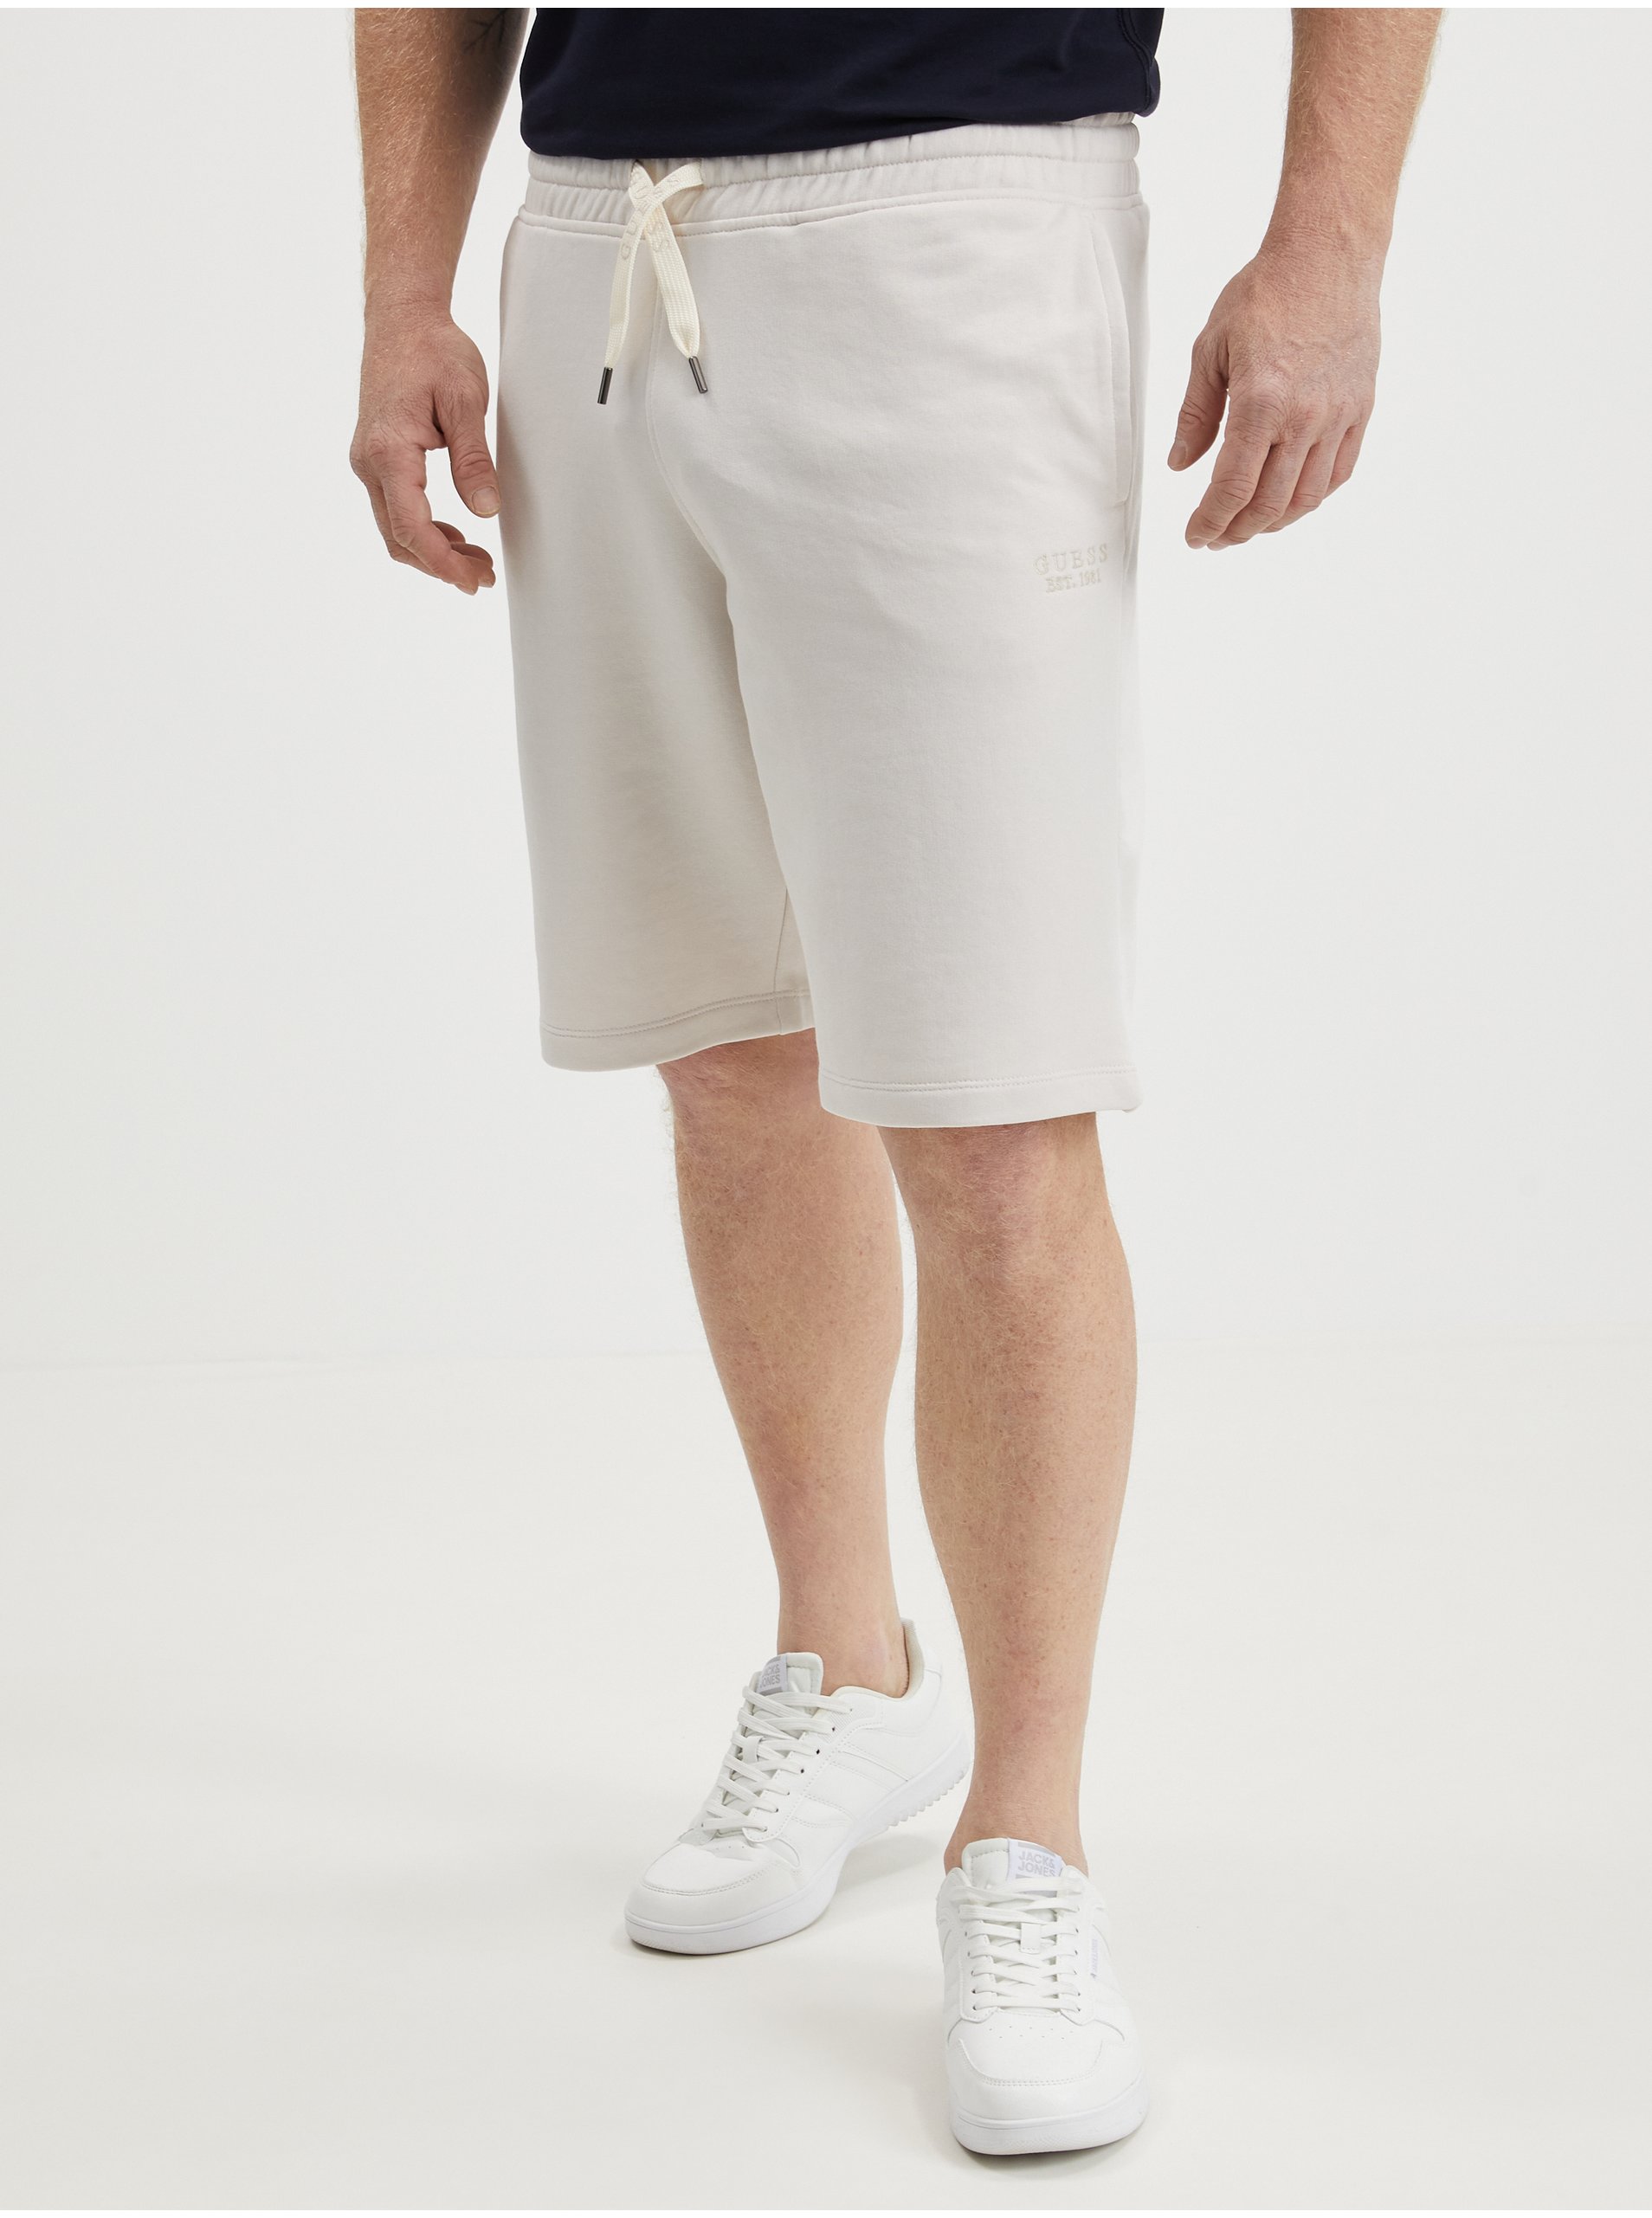 White Mens Sweatpants Shorts Guess Clovis - Men